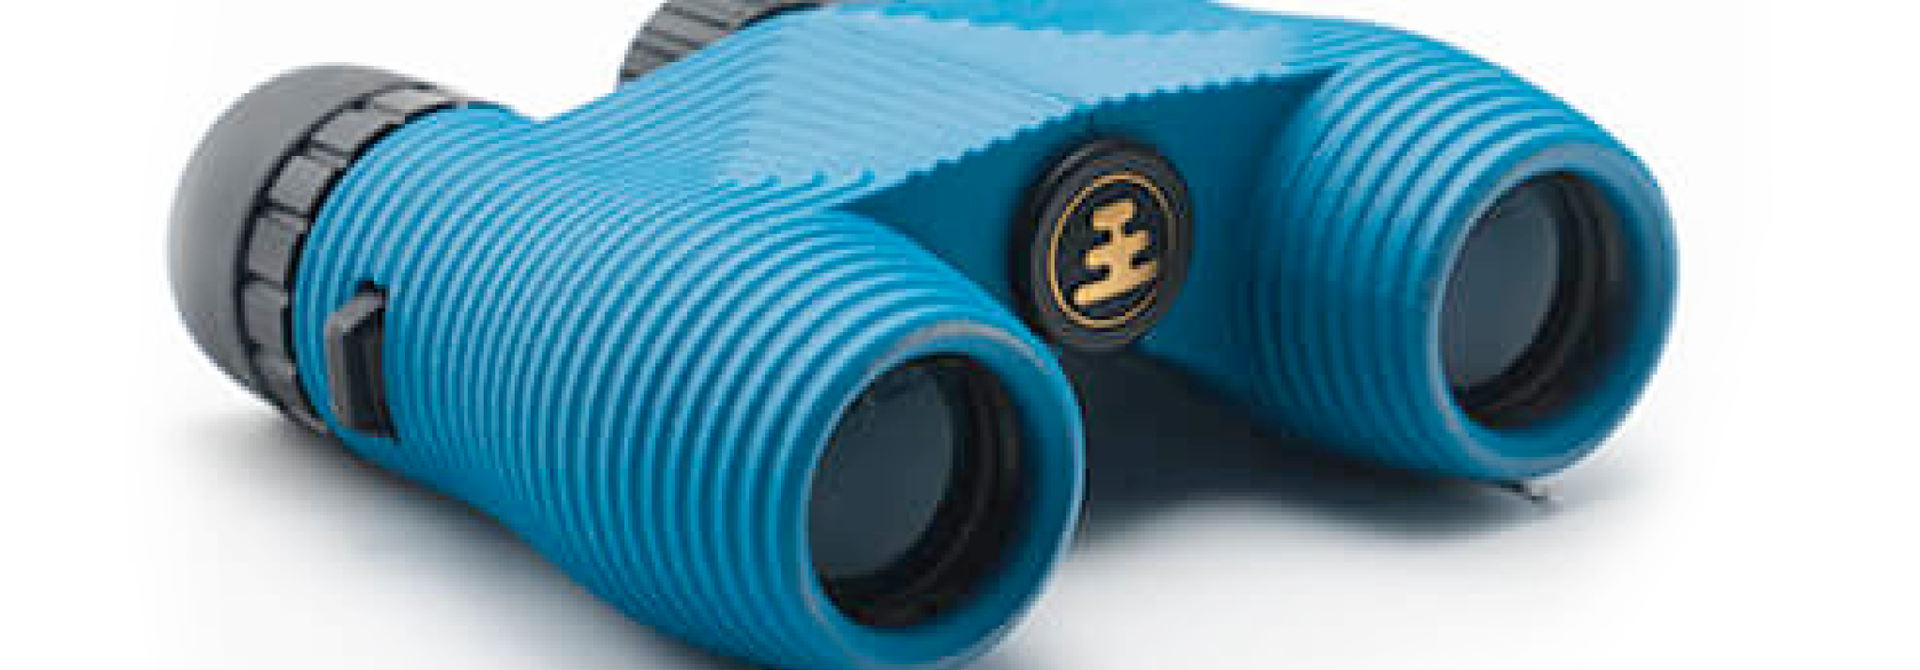 Standard Issue 8x25 Waterproof Bioulars- Cobalt (Blue)